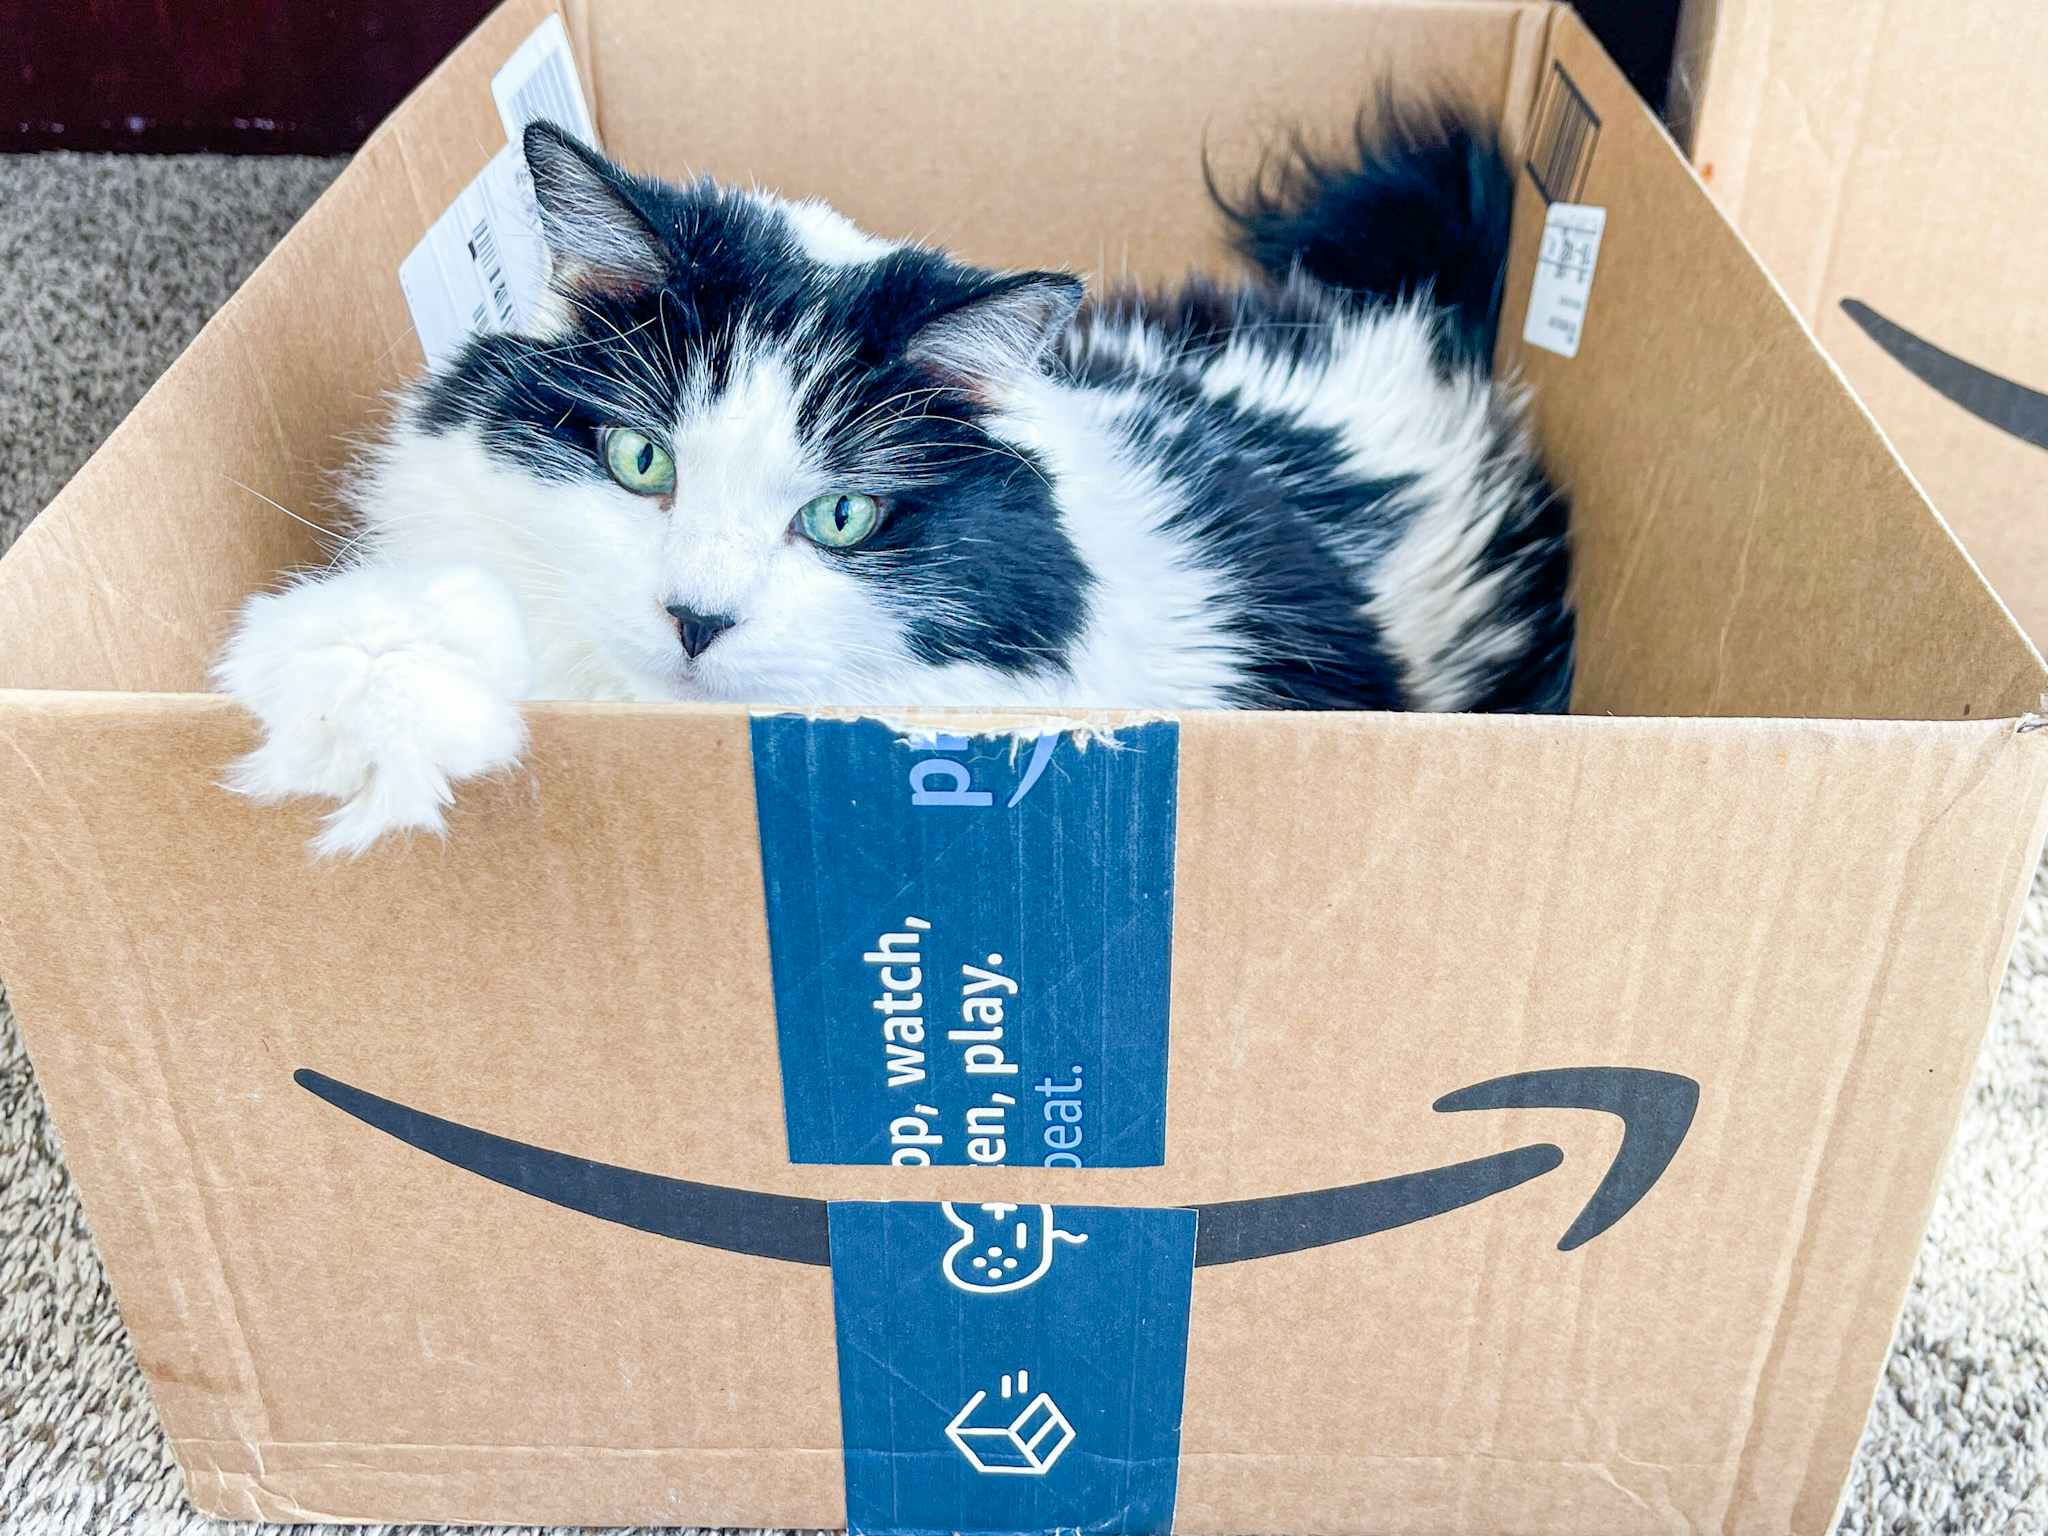 A cat sitting in an Amazon Prime cardboard box.